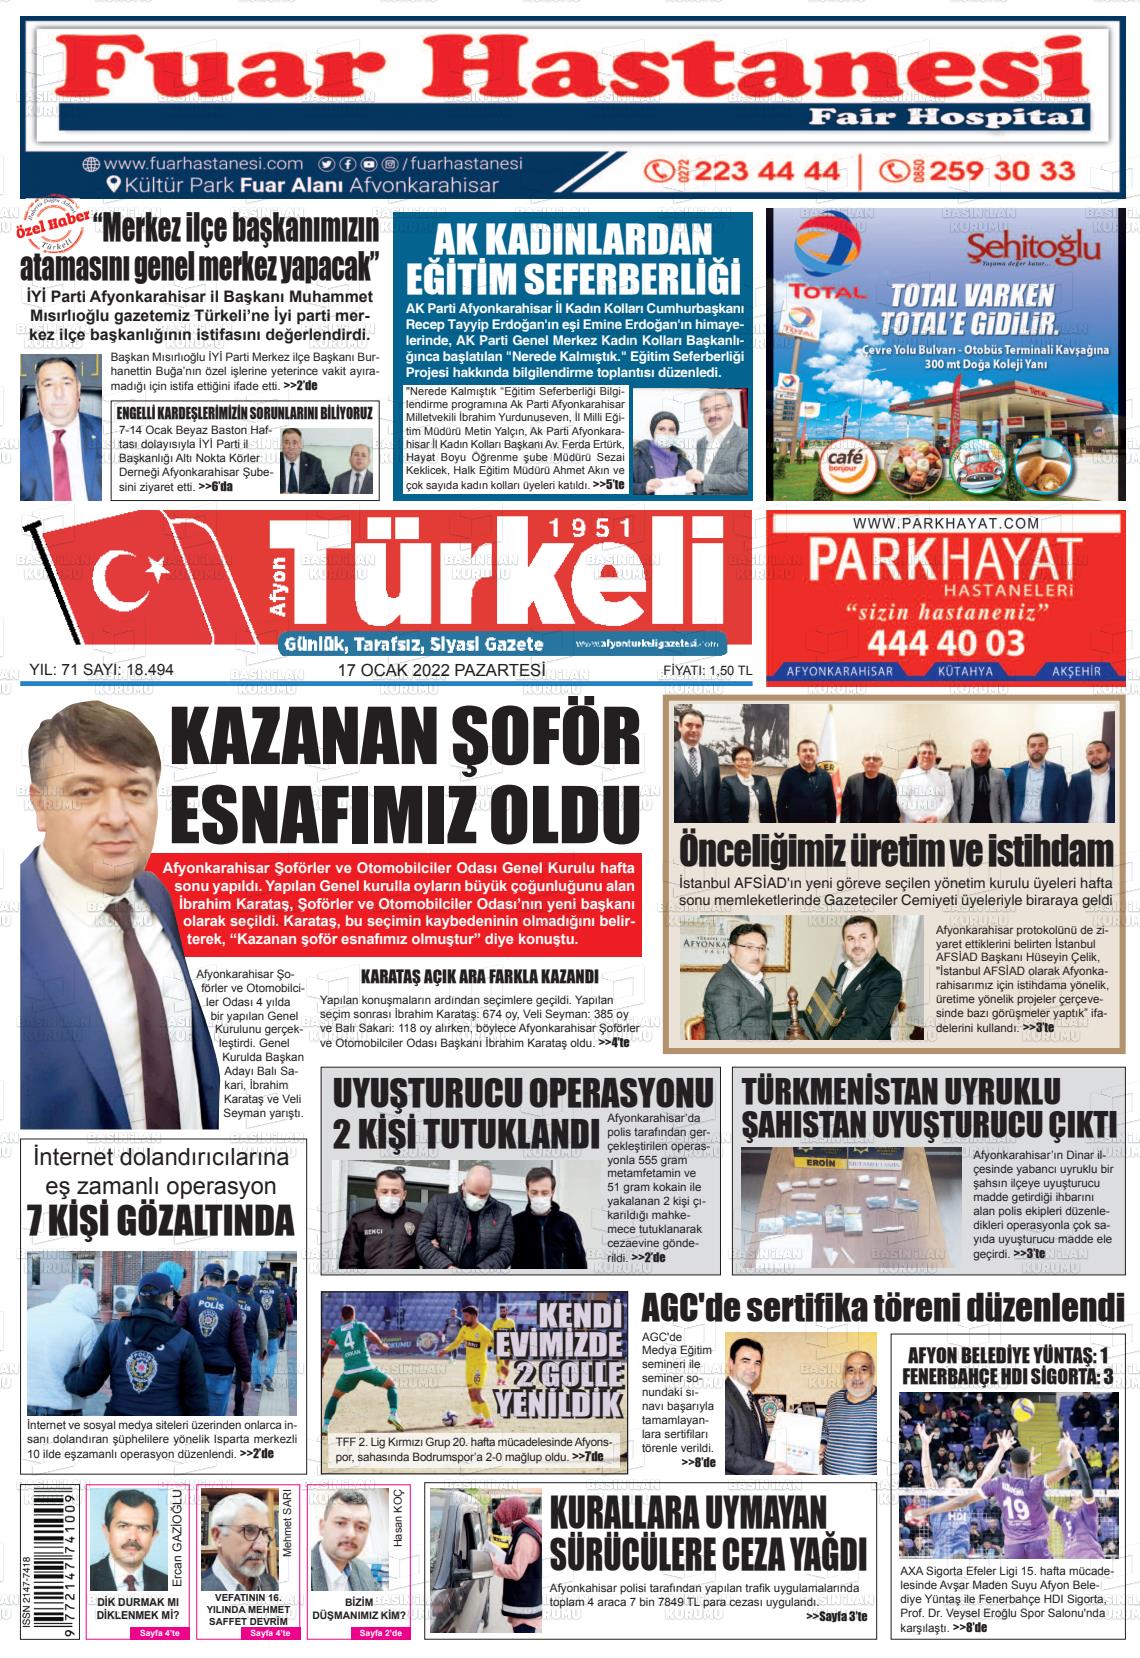 17 Ocak 2022 Afyon Türkeli Gazete Manşeti